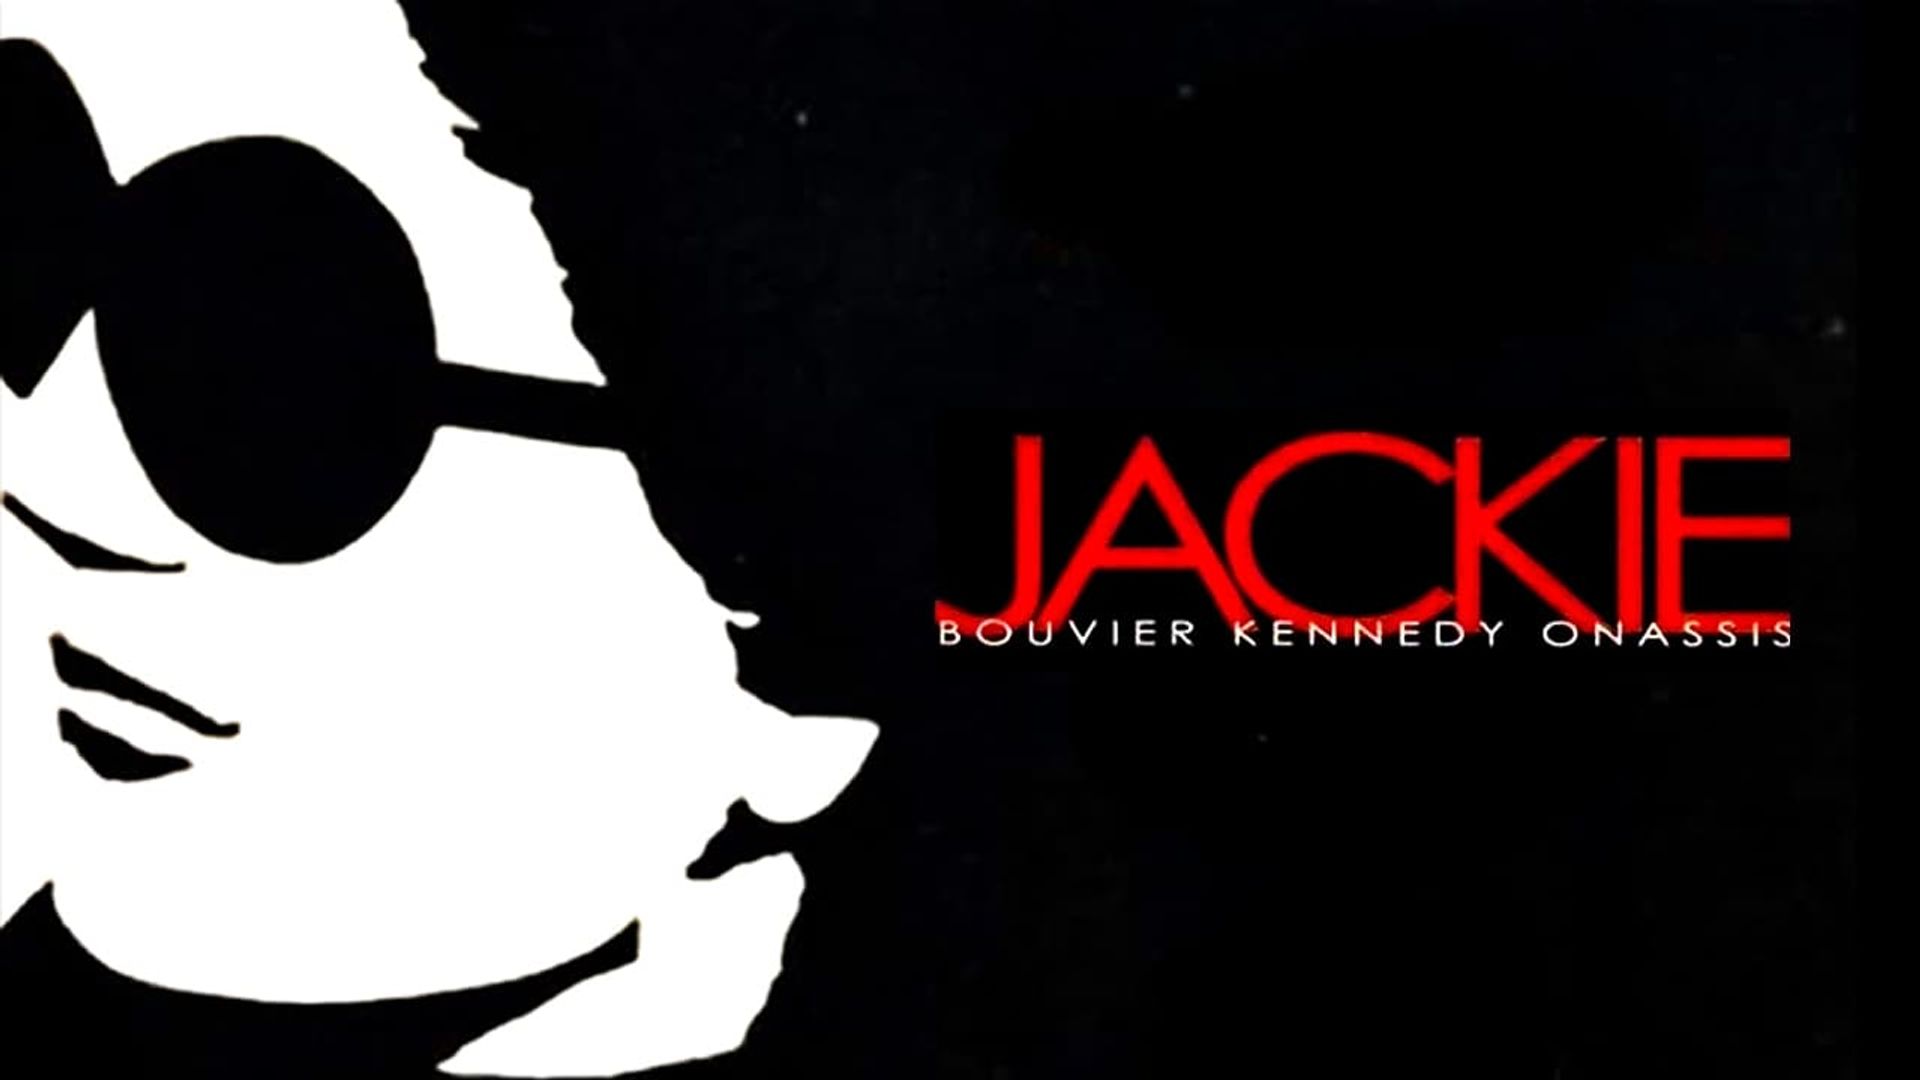 Jackie Bouvier Kennedy Onassis background